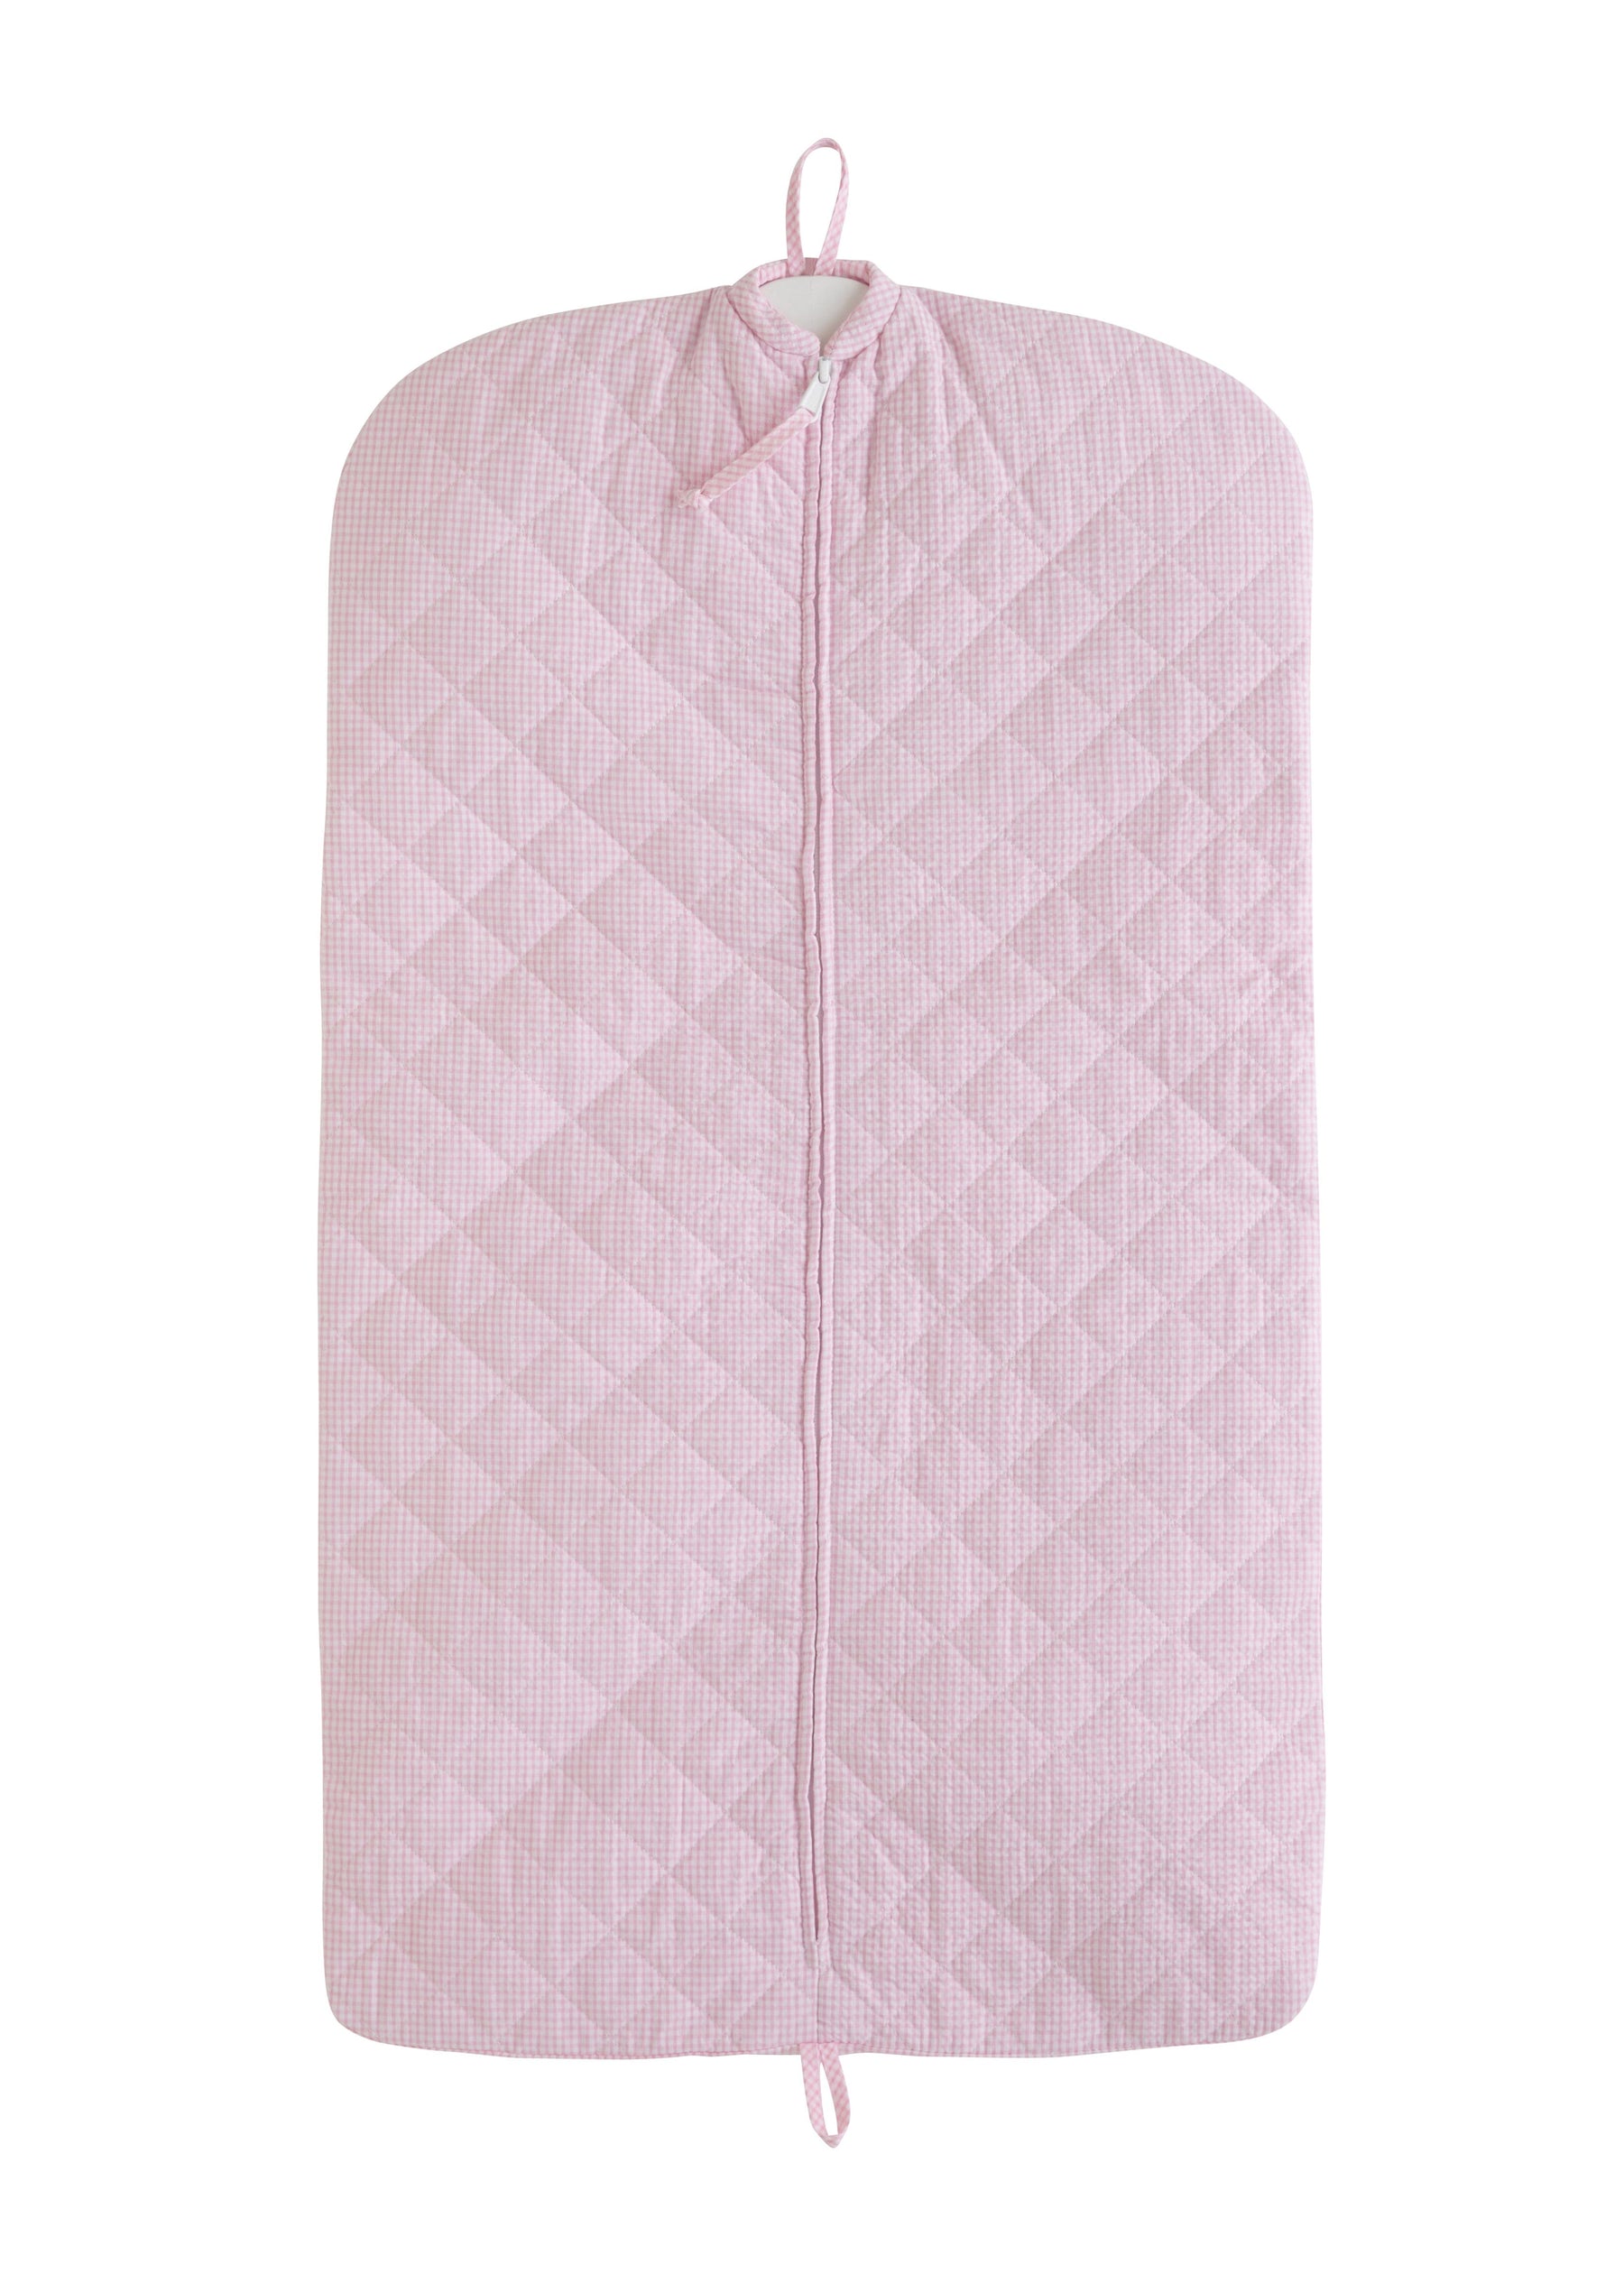 seguridadindustrialcr classic children's luggage light pink garment bag